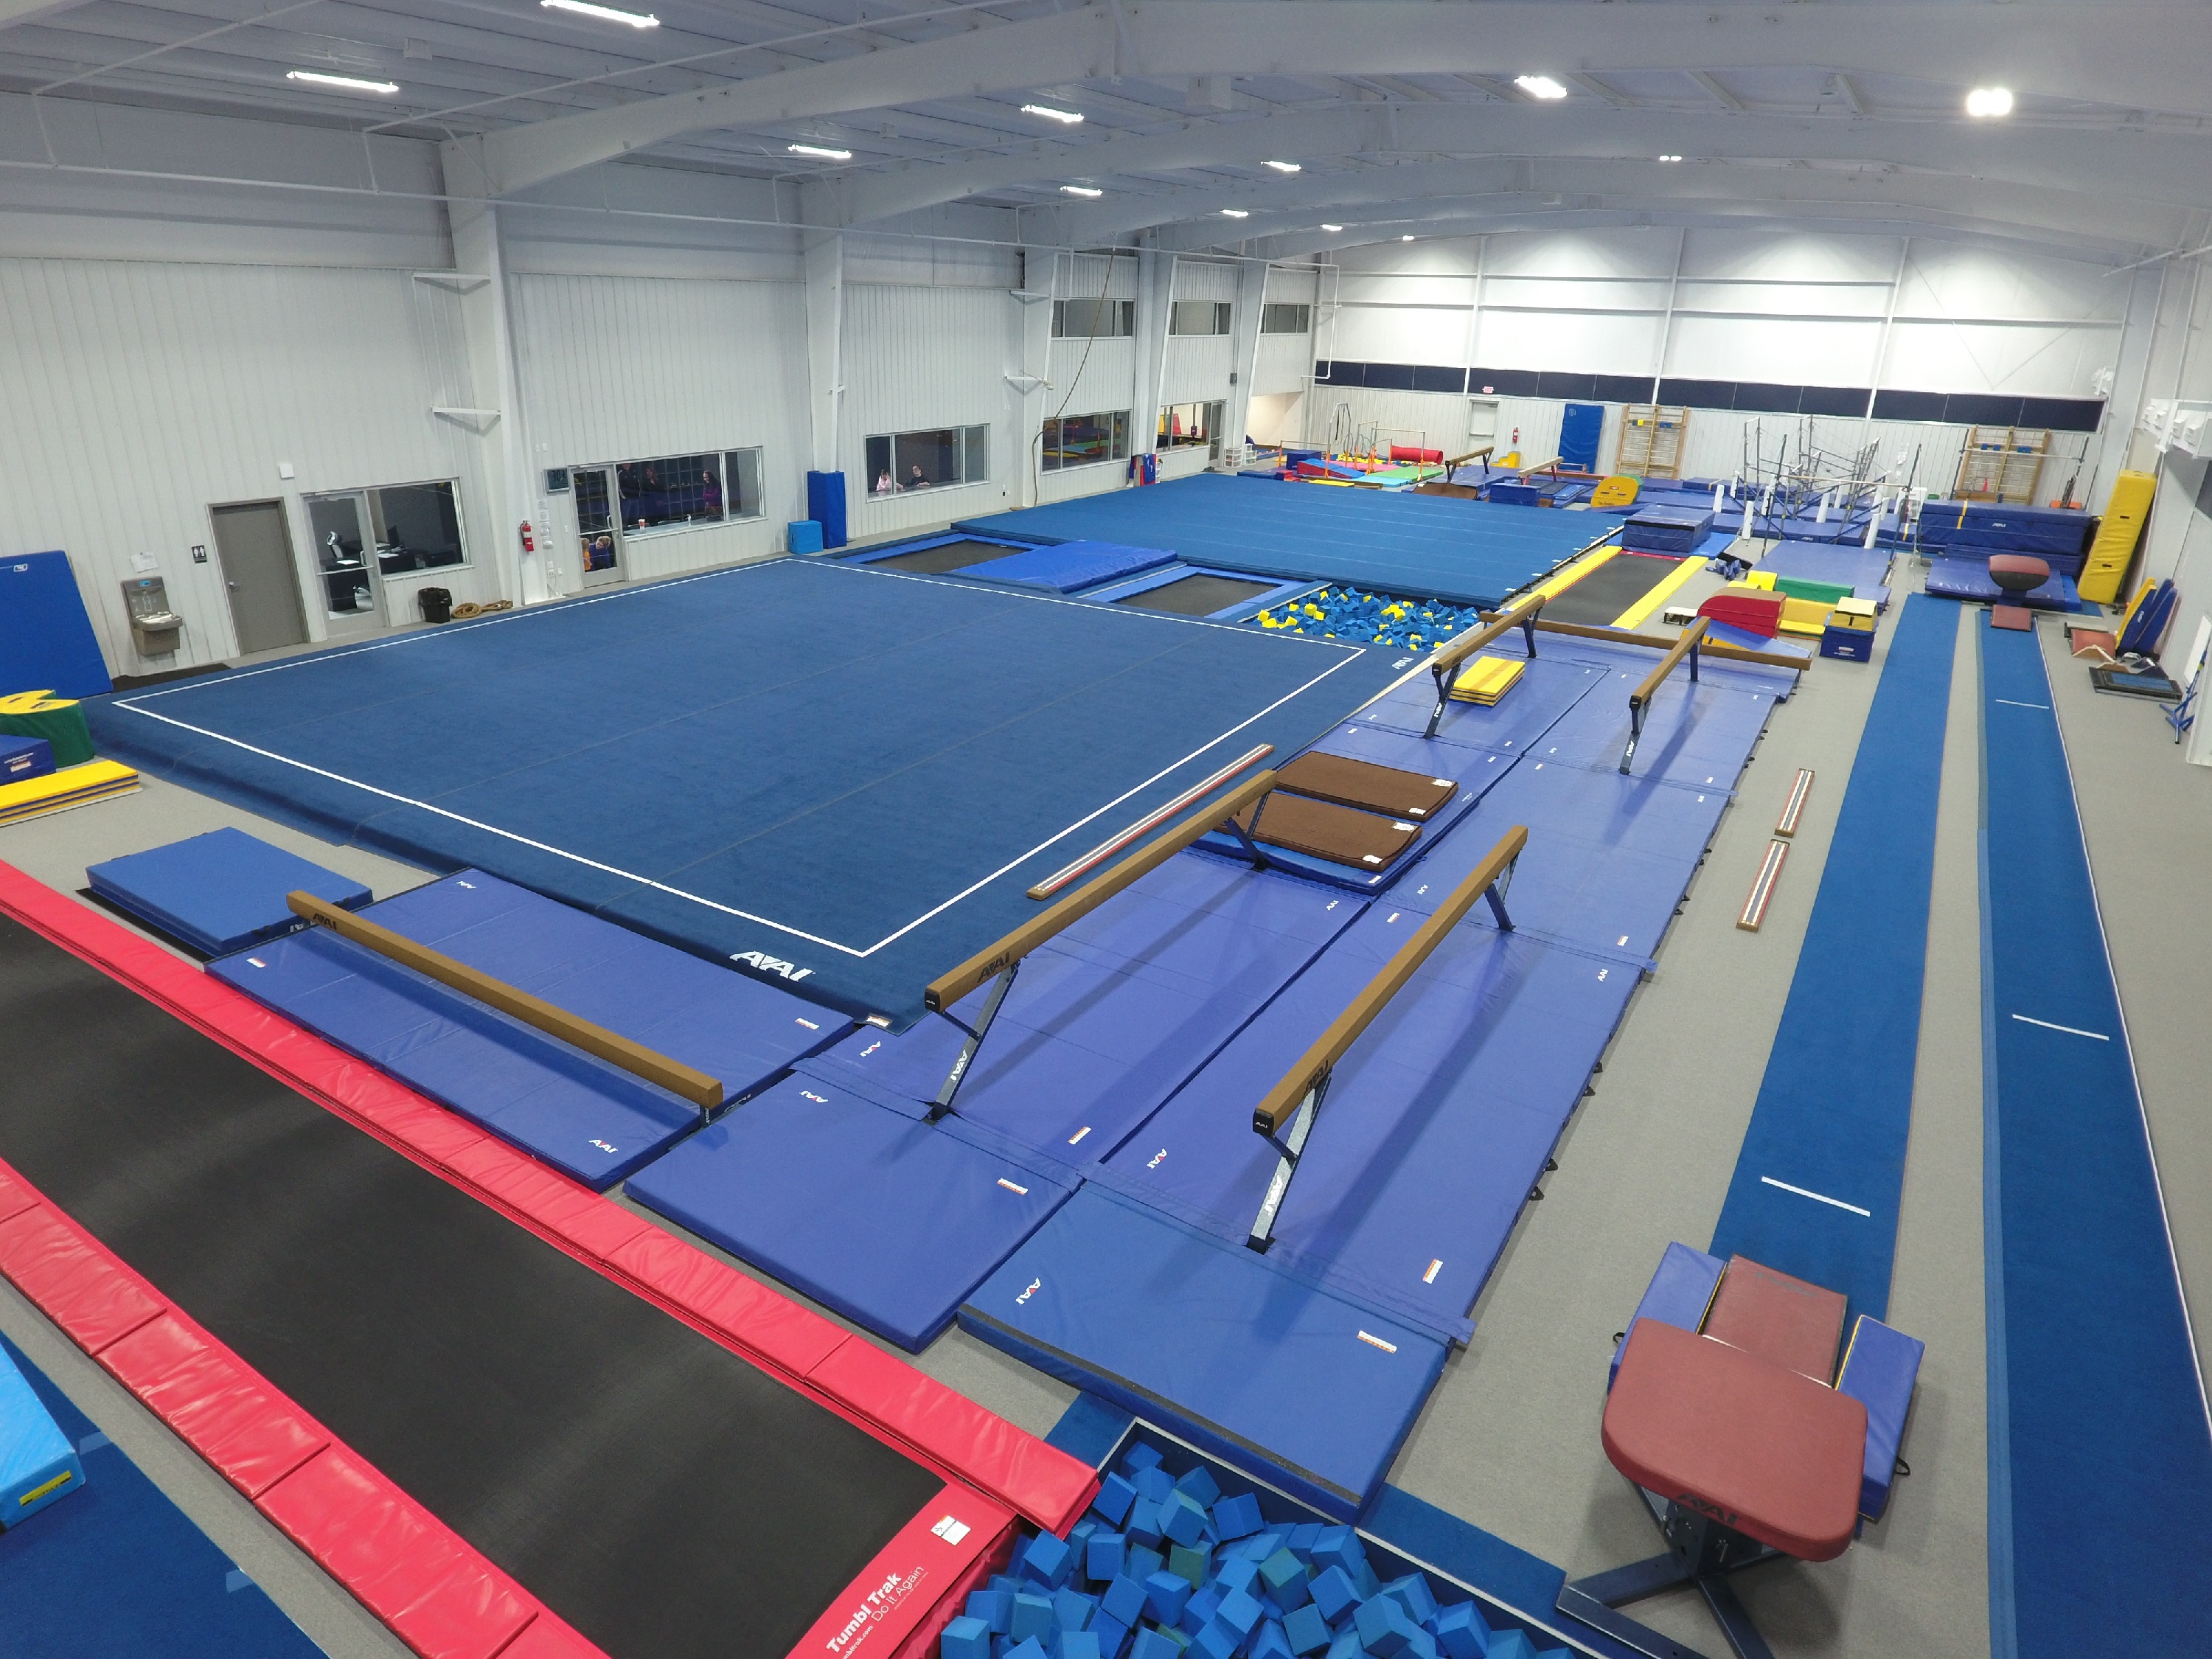 image of gymnastics gym with gymnastics equipment